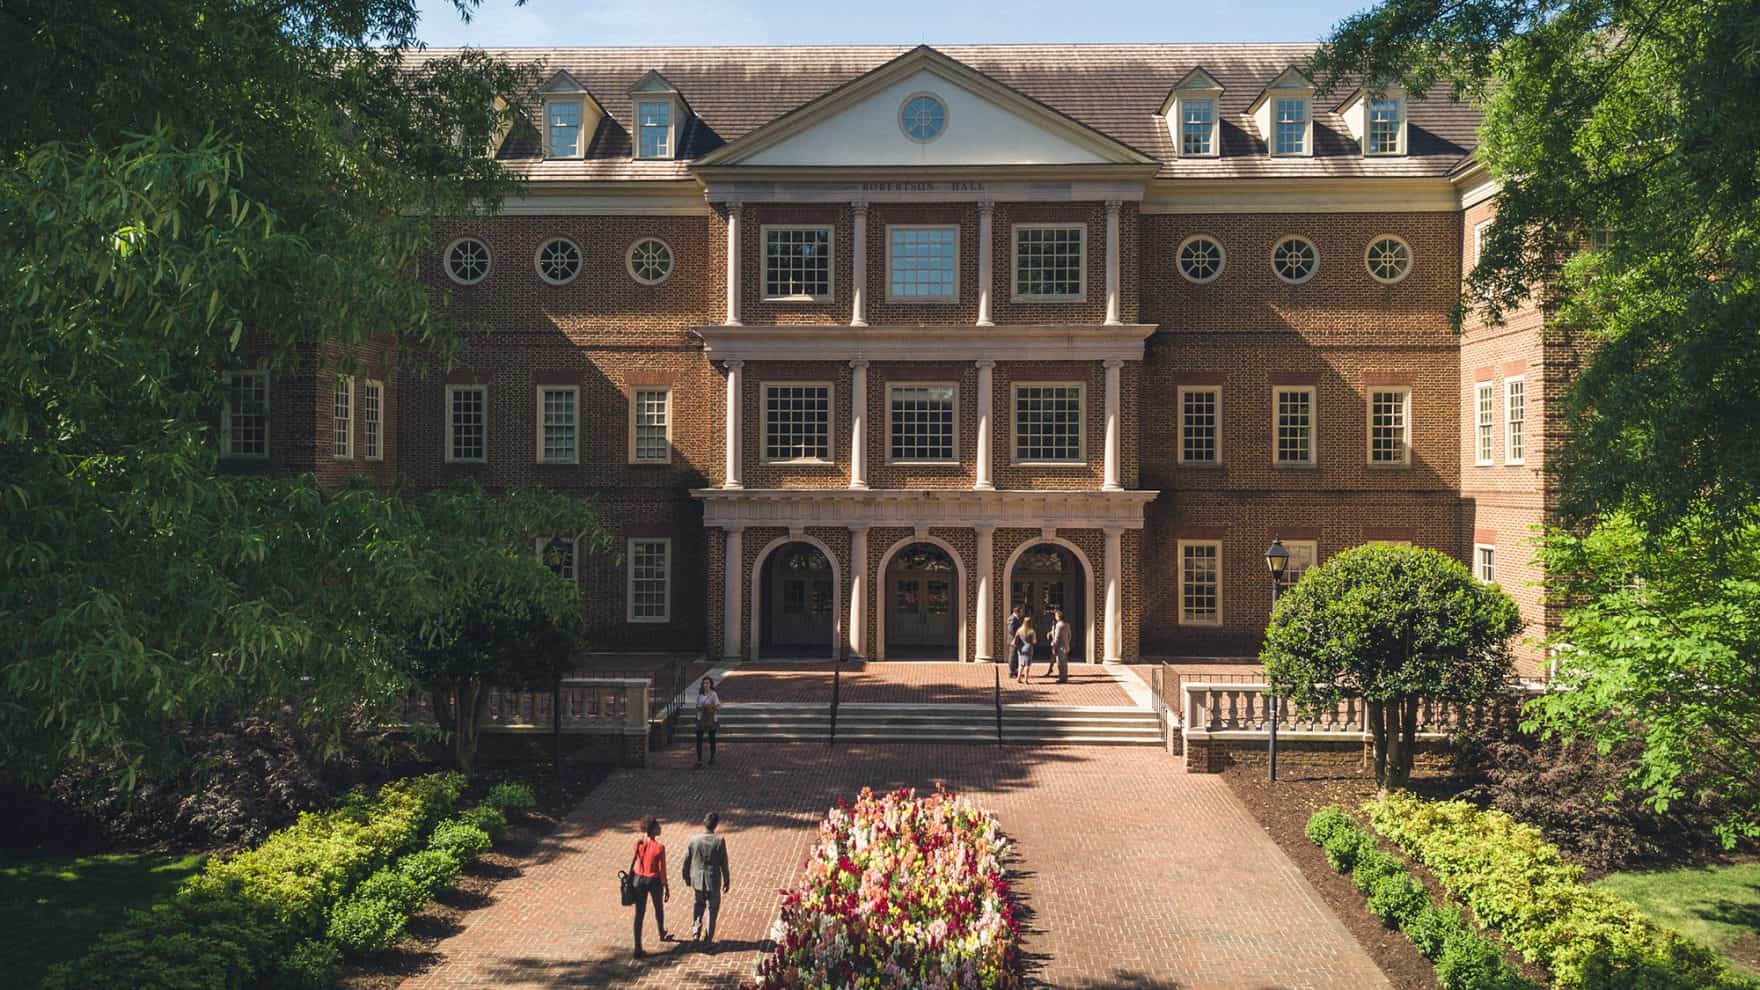 Robertson Hall, which houses Regent University's law school in Virginia Beach, VA 23464.